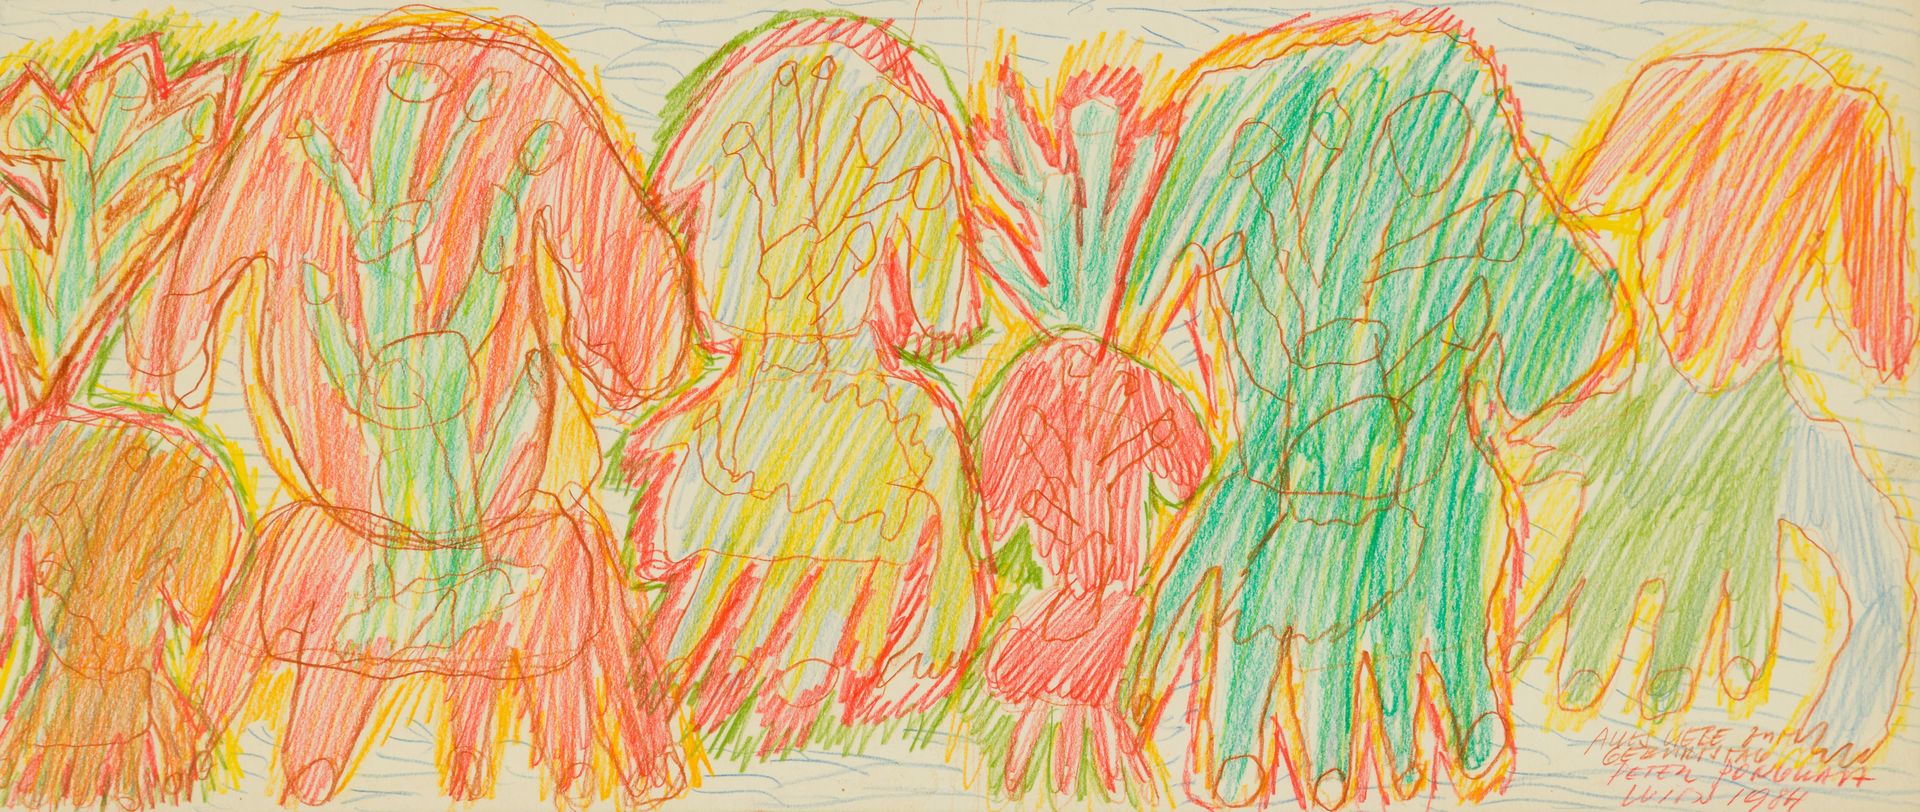 Pongratz, Peter 无题》，1984年
纸上彩色铅笔
右下角有签名、日期和献词
22,5 x 53,5 cm
已装裱
Peter Pongratz生&hellip;